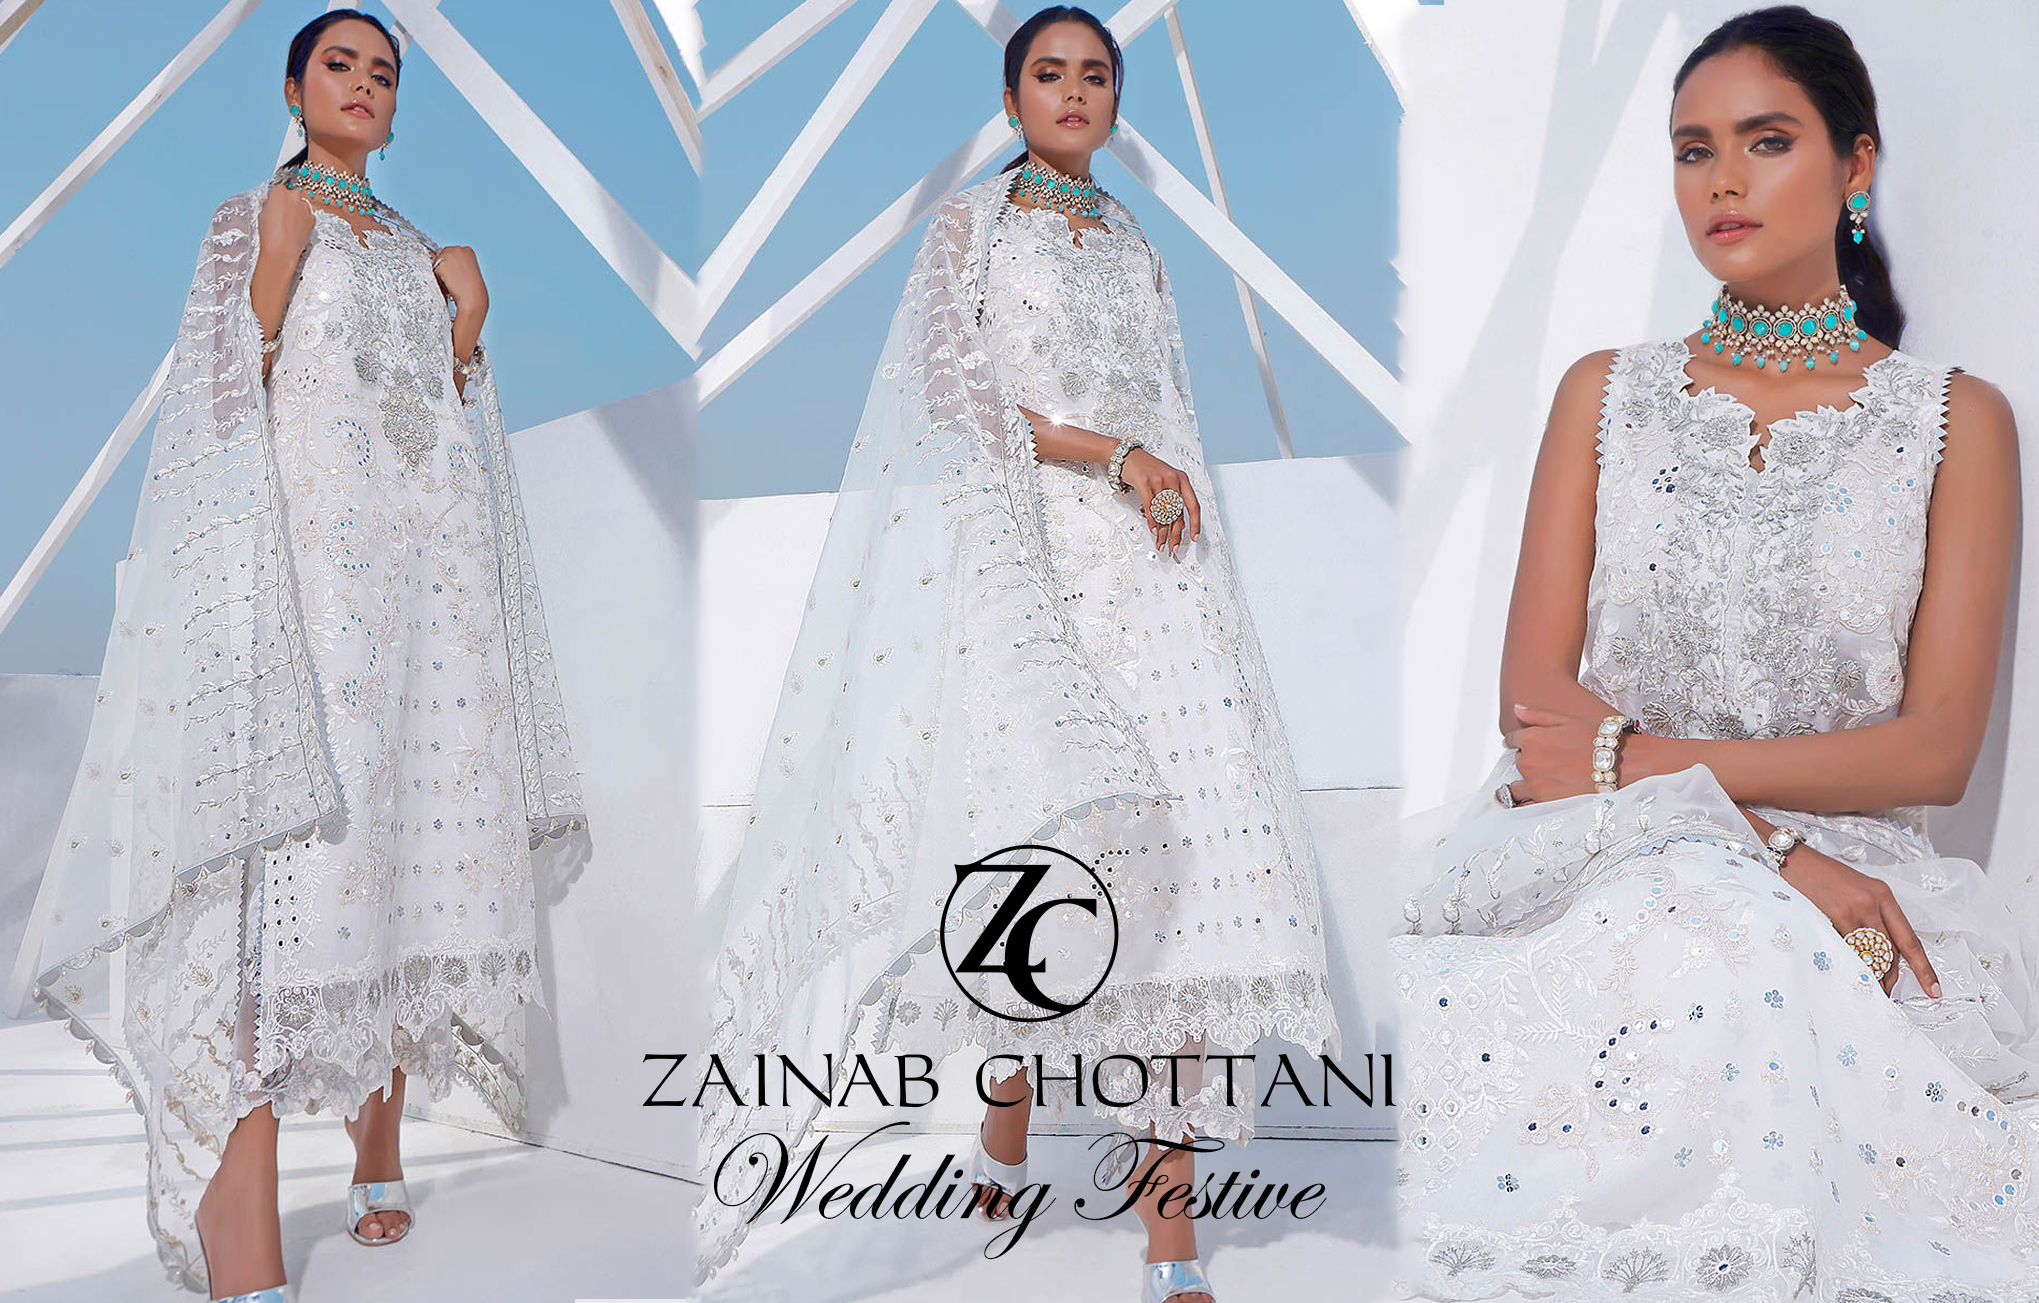 Zainab Chottani Wedding Festive: Accessorize To The Occasion